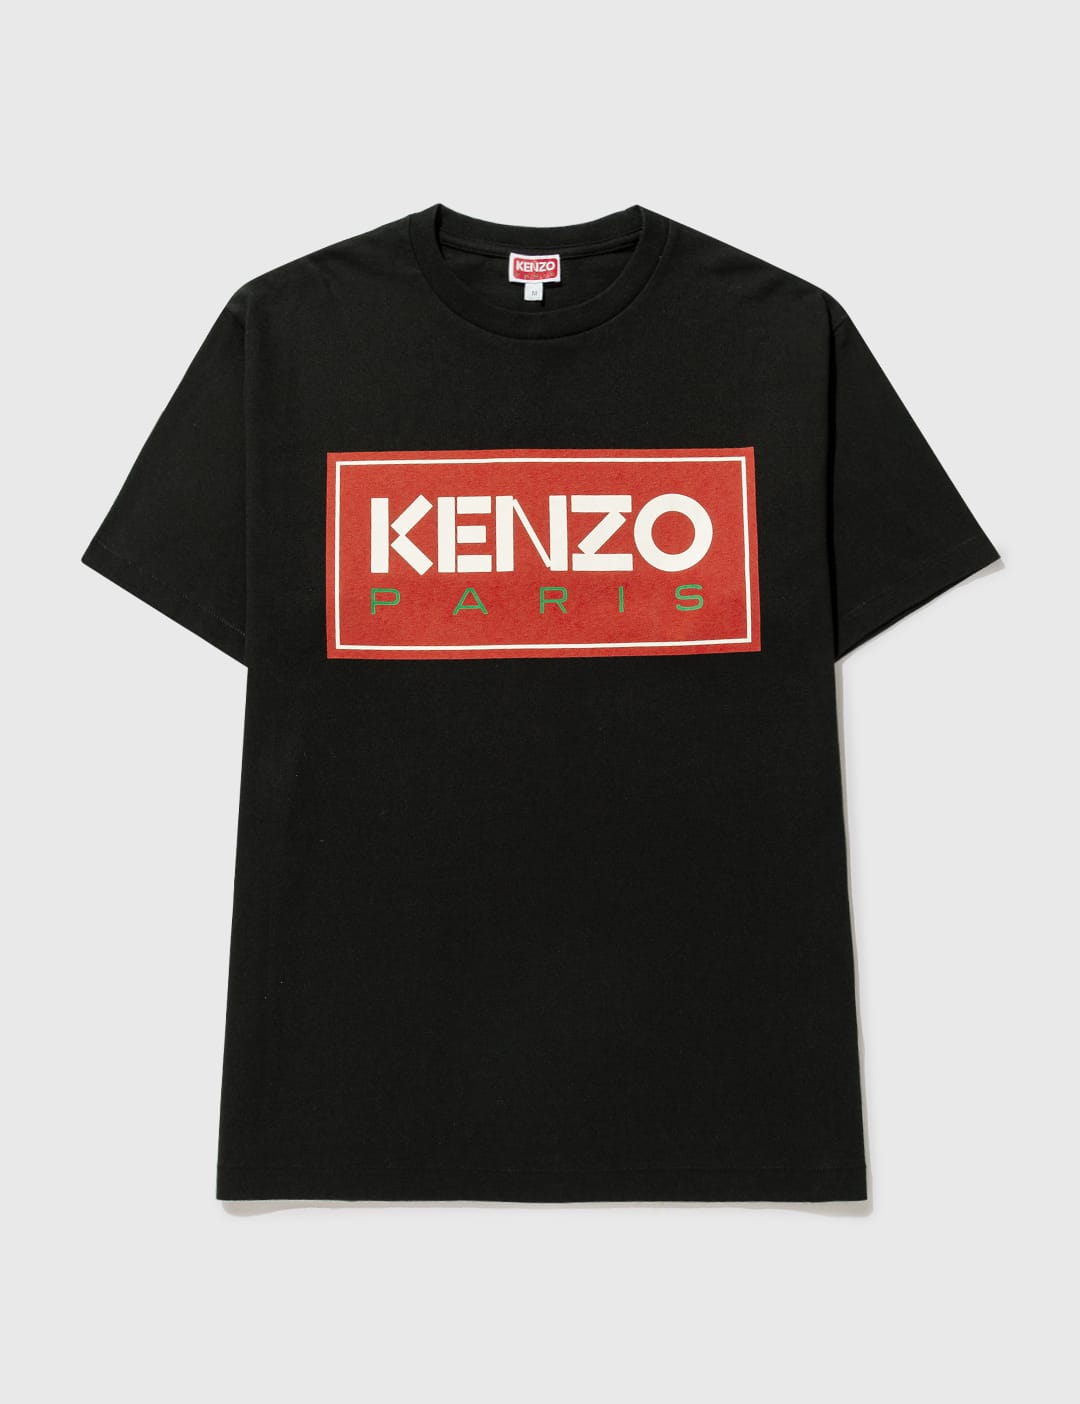 KENZO Paris T-shirt